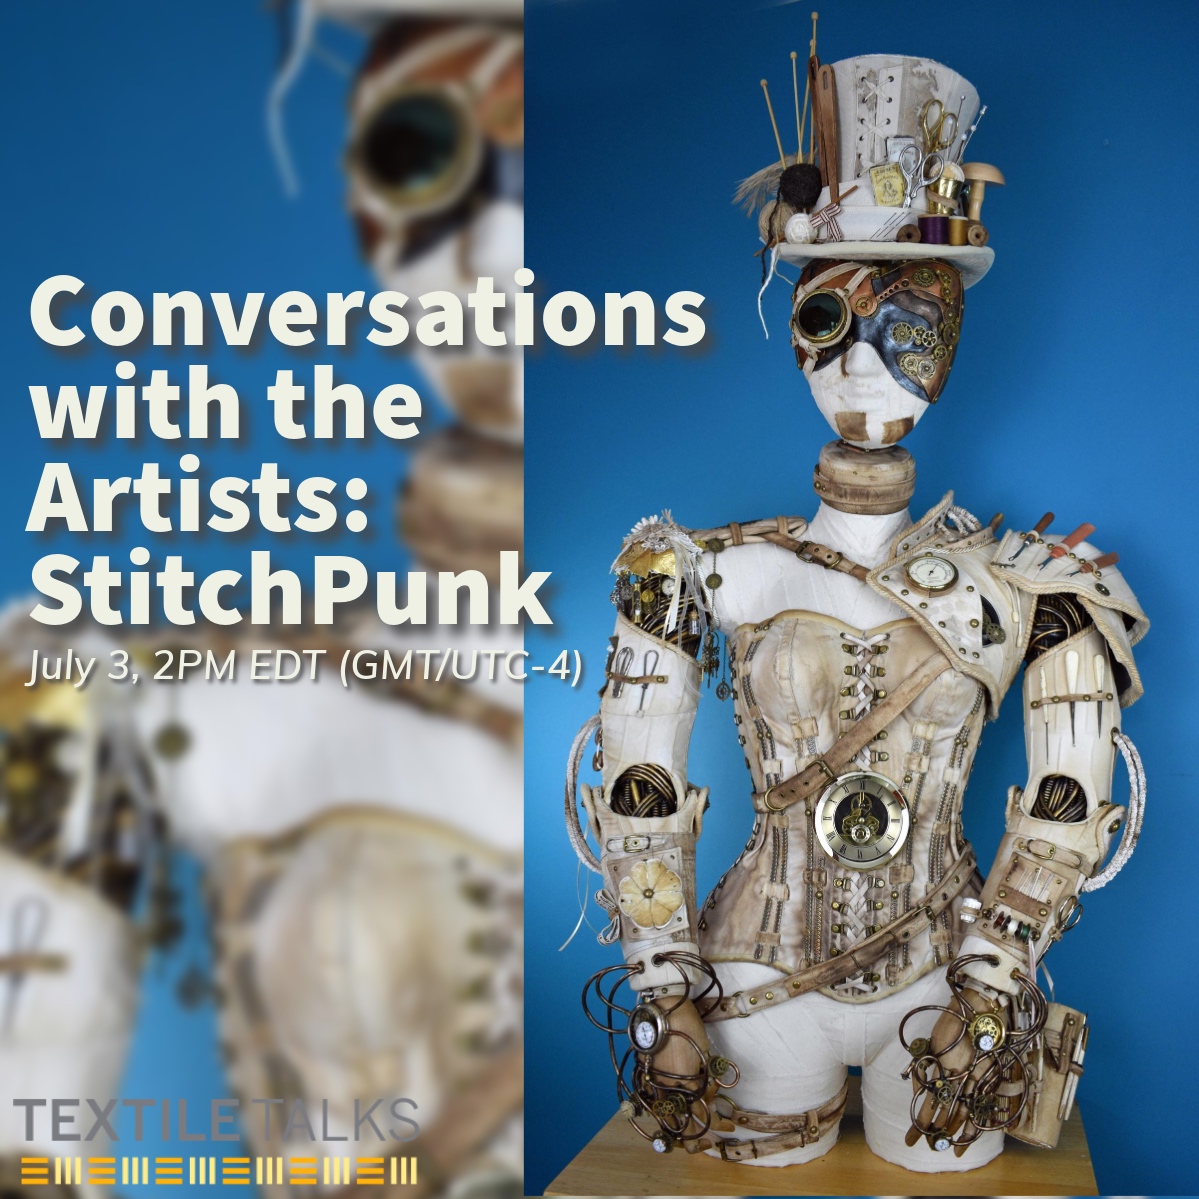 textile-talk-conversations-with-the-artists-stitchpunk.jpg